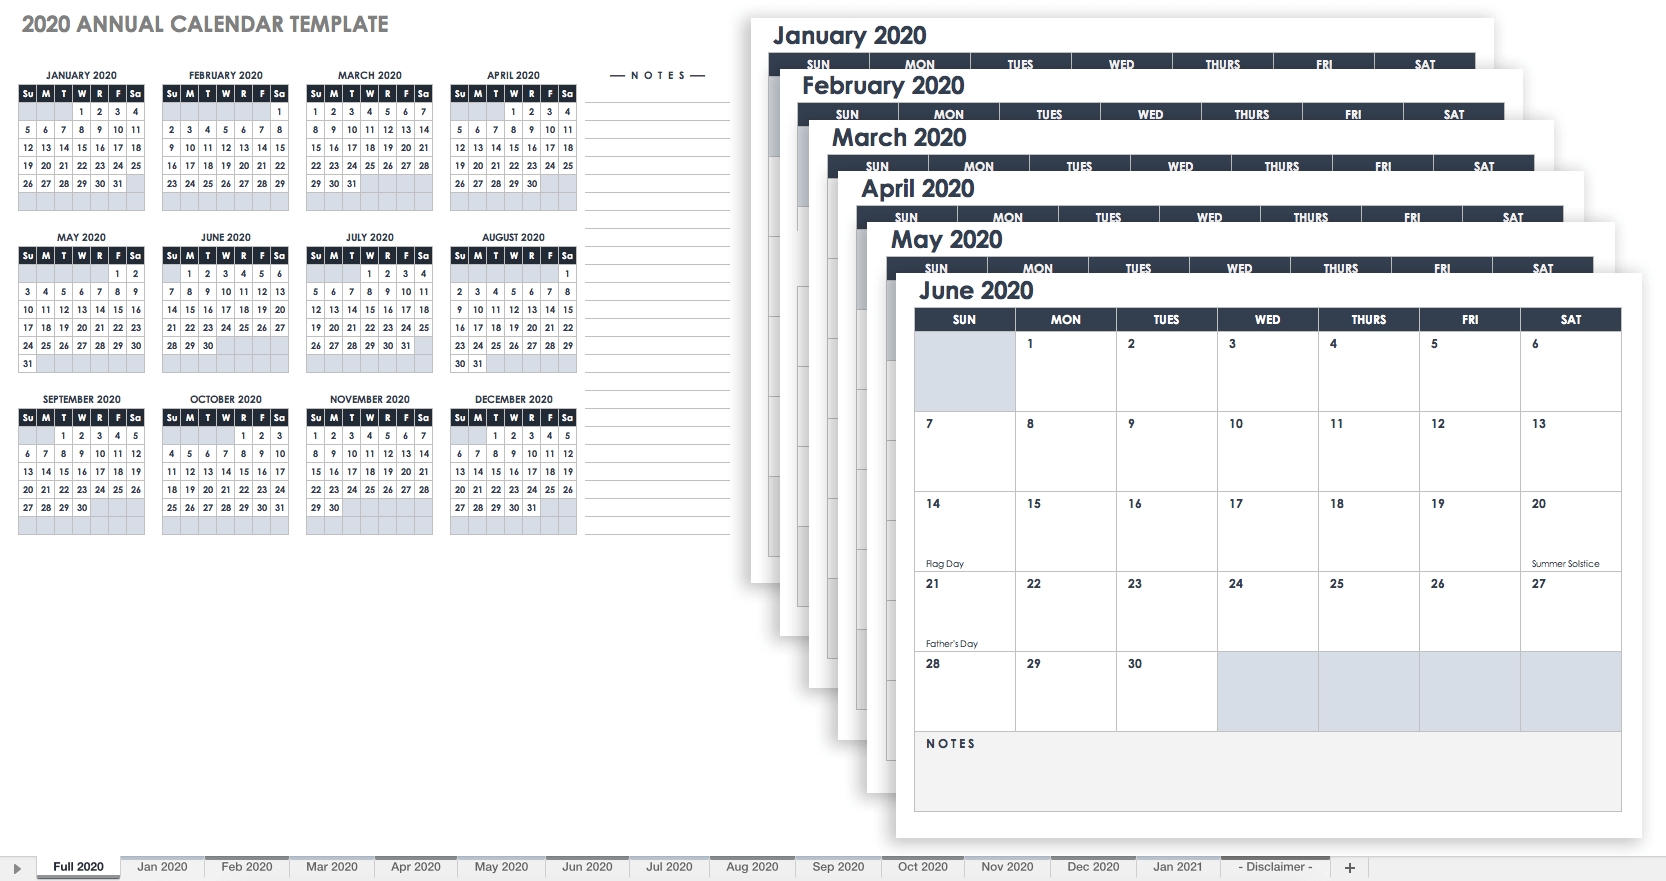 Free Blank Calendar Templates - Smartsheet 4 Year Calendar Template